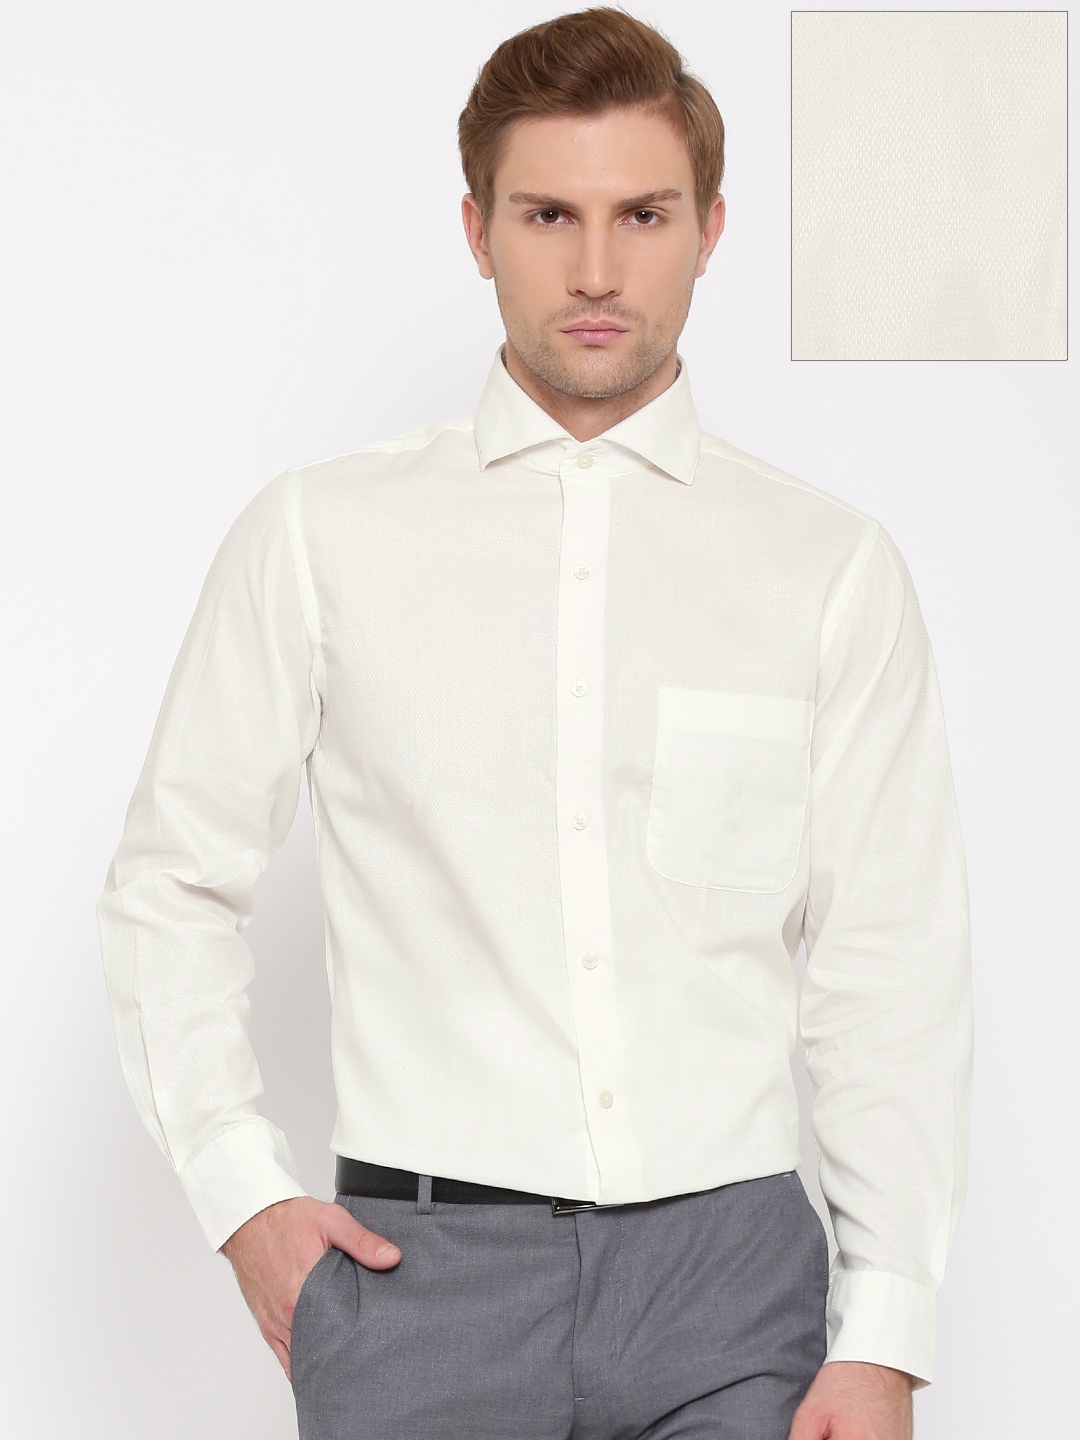 Buy Arrow Off White Formal Shirt - Shirts for Men 1246604 | Myntra